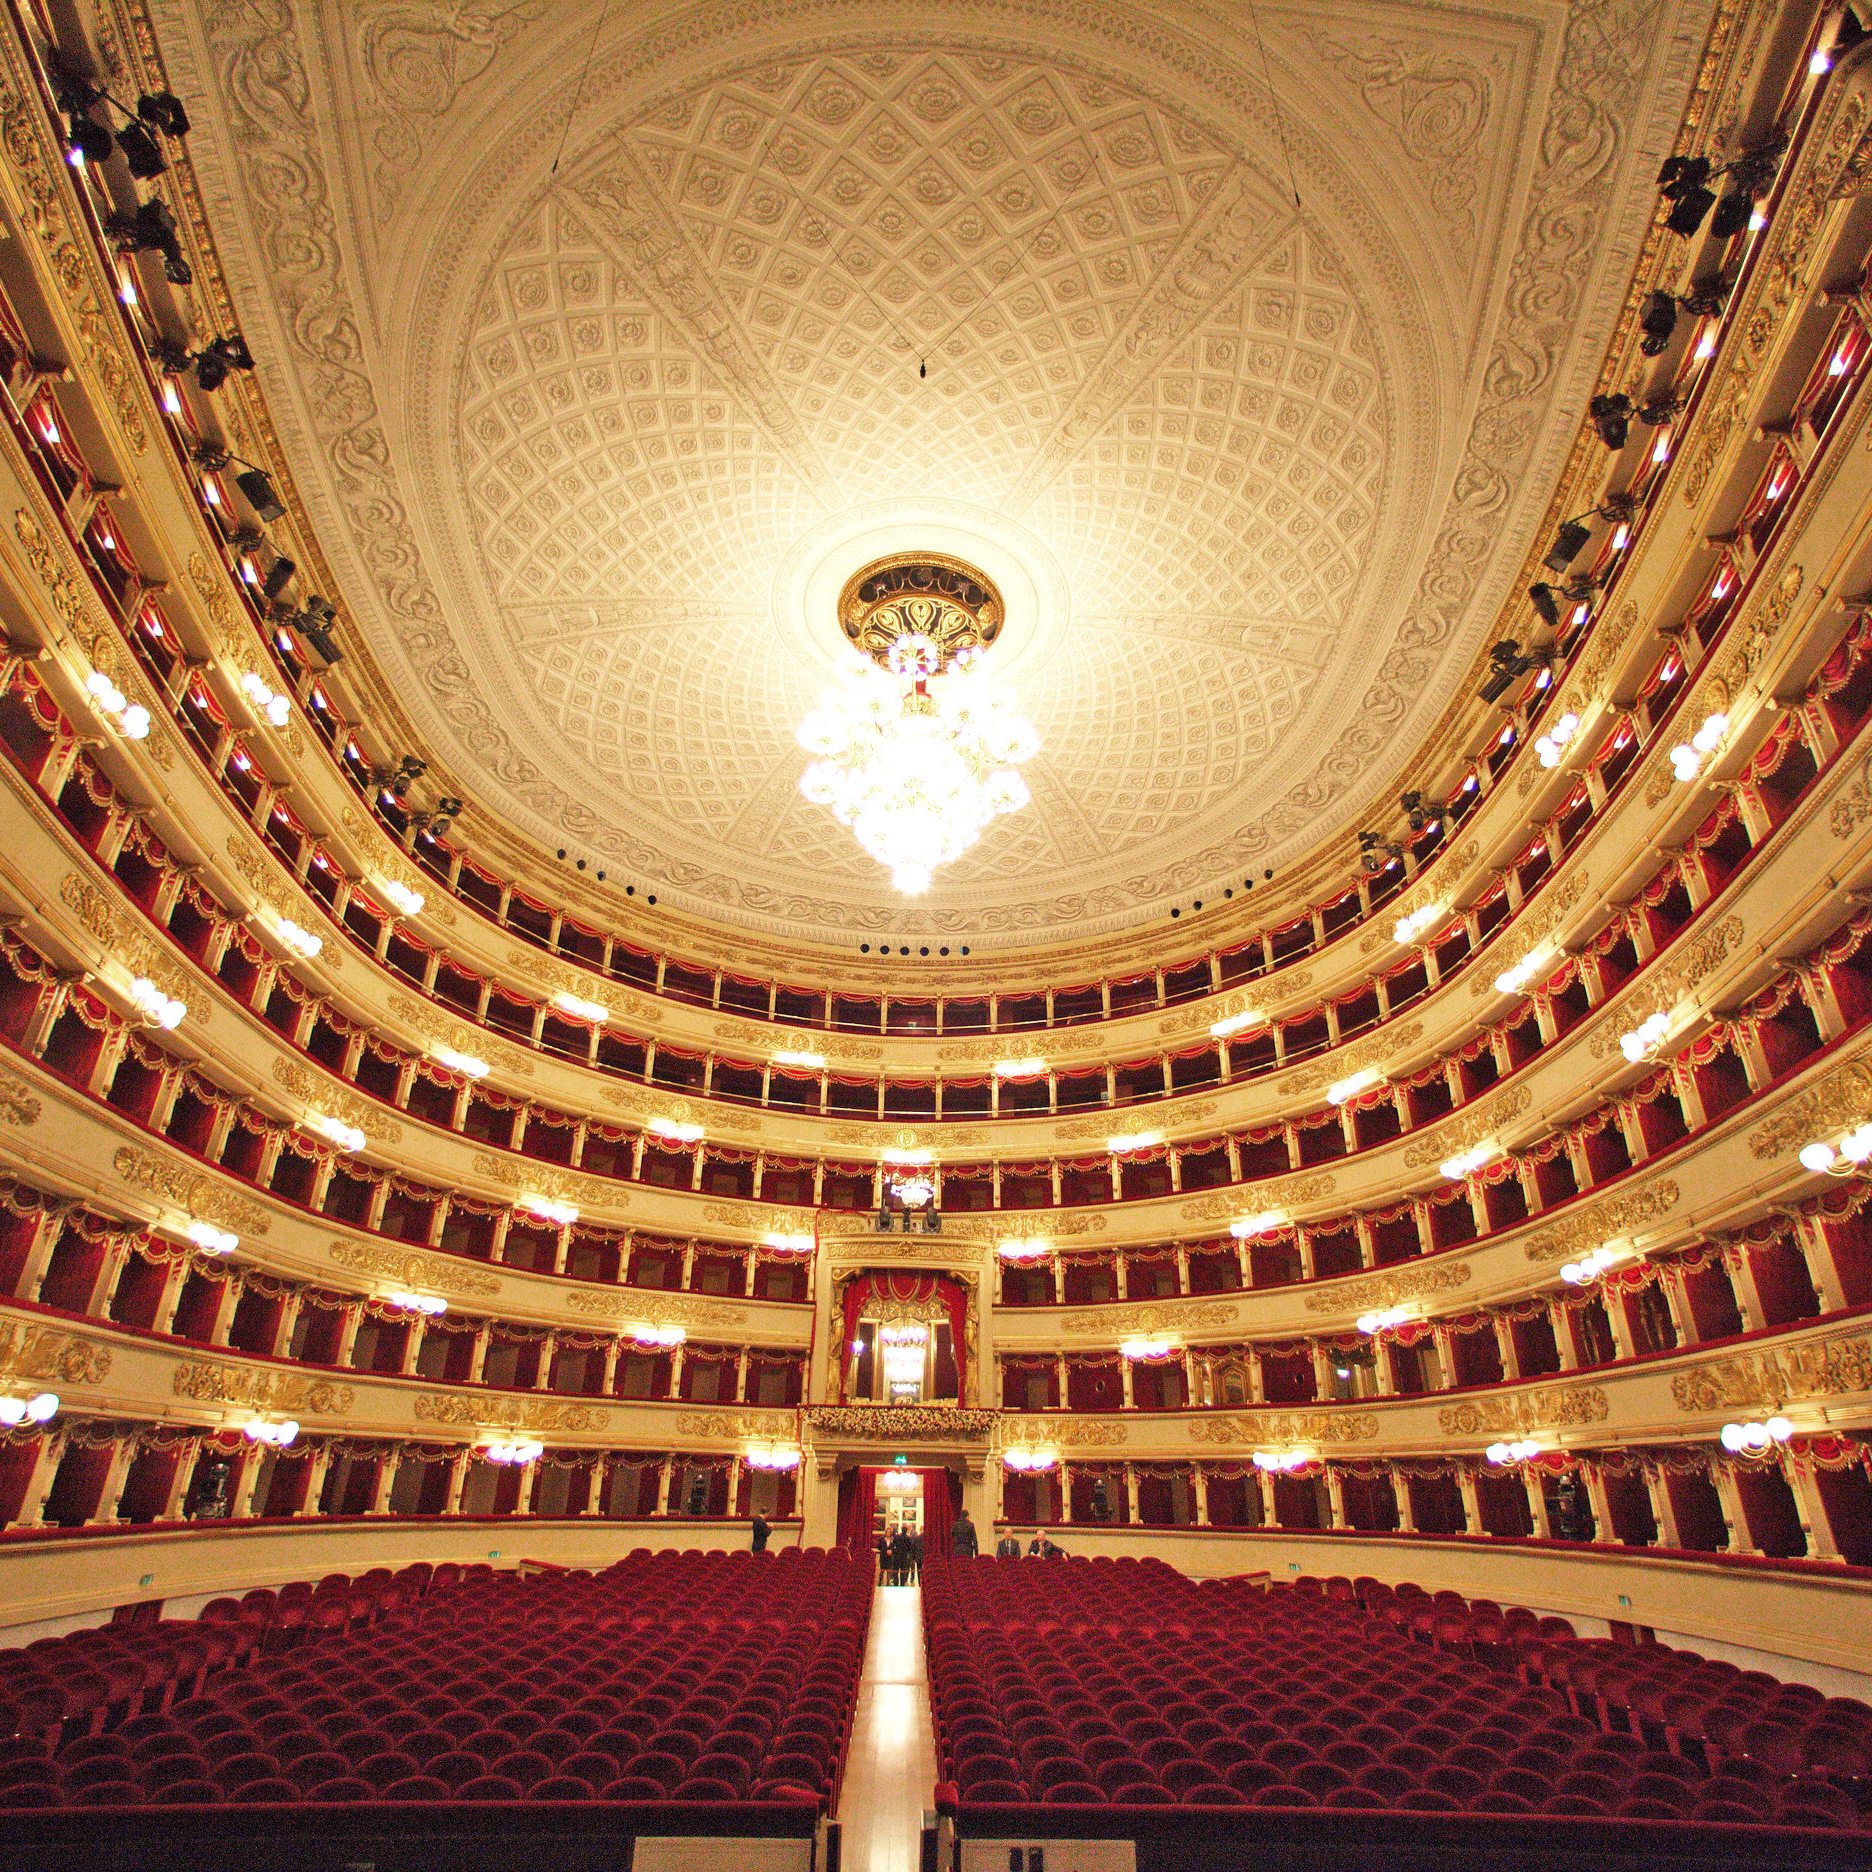 Teatro alla Scala debut